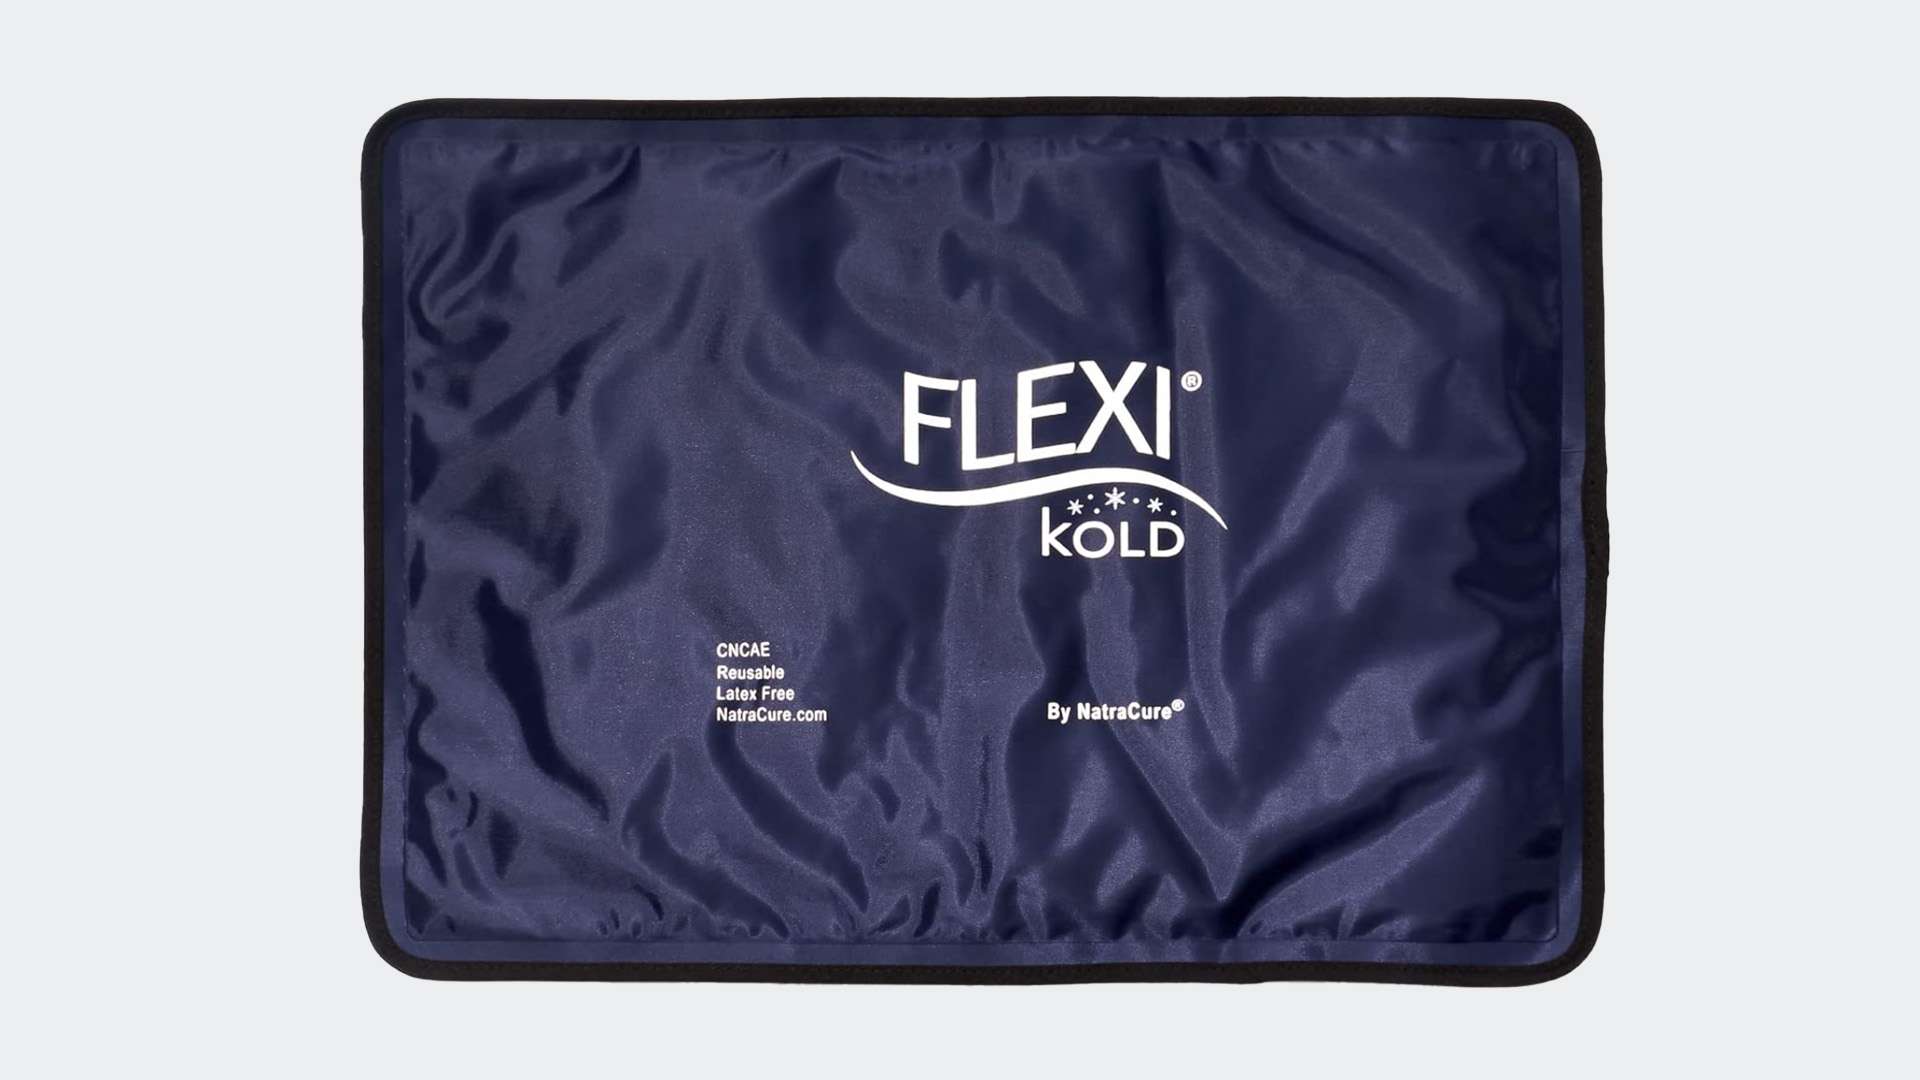 FlexiKold gel ice pack